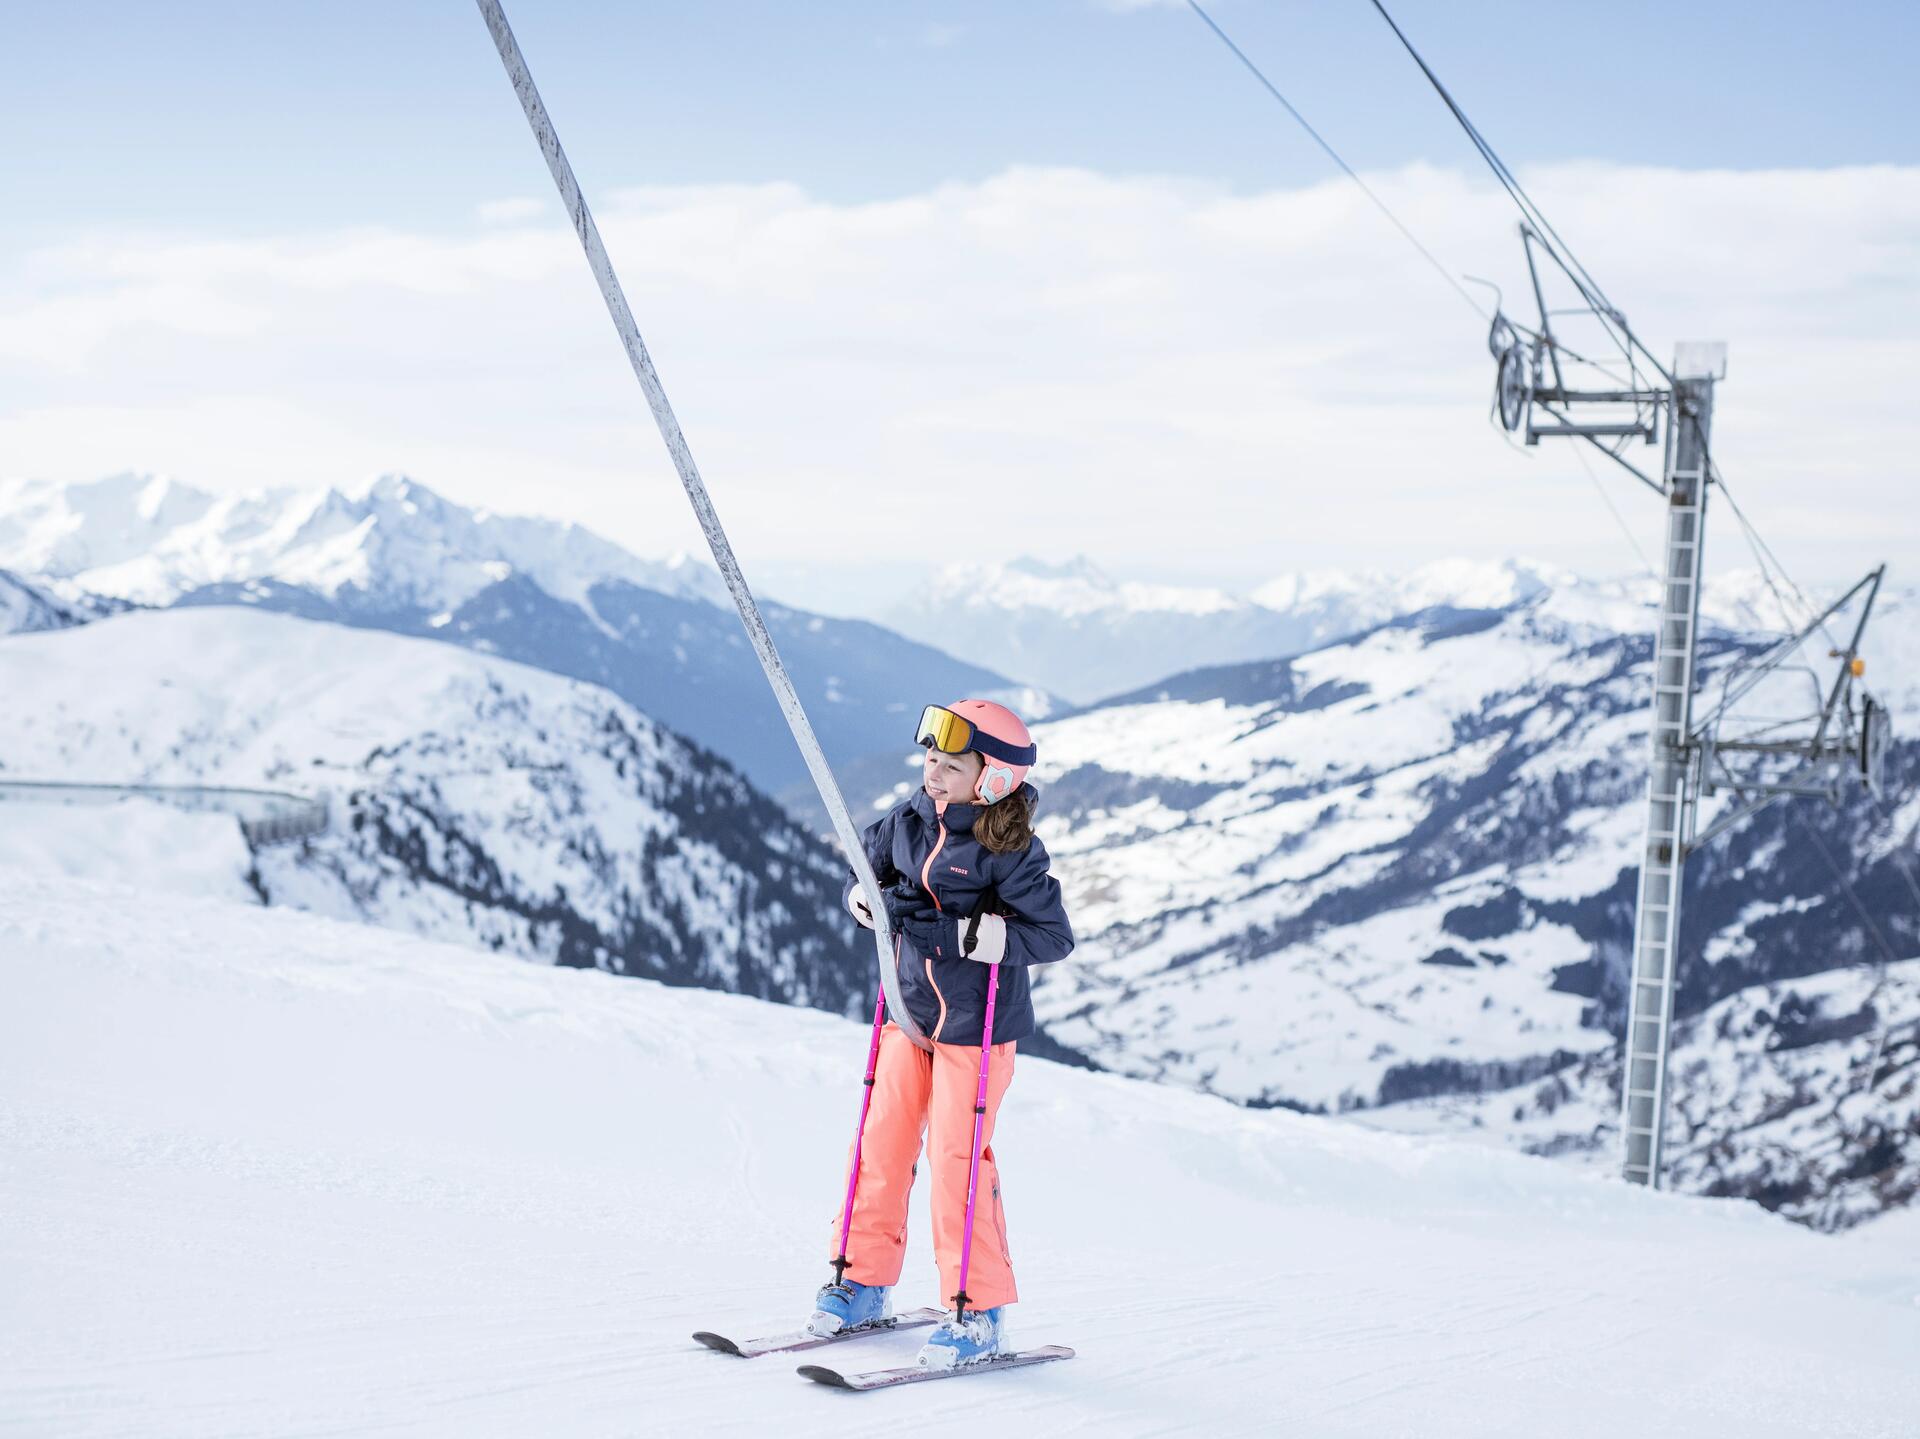 Discover the ski slope code